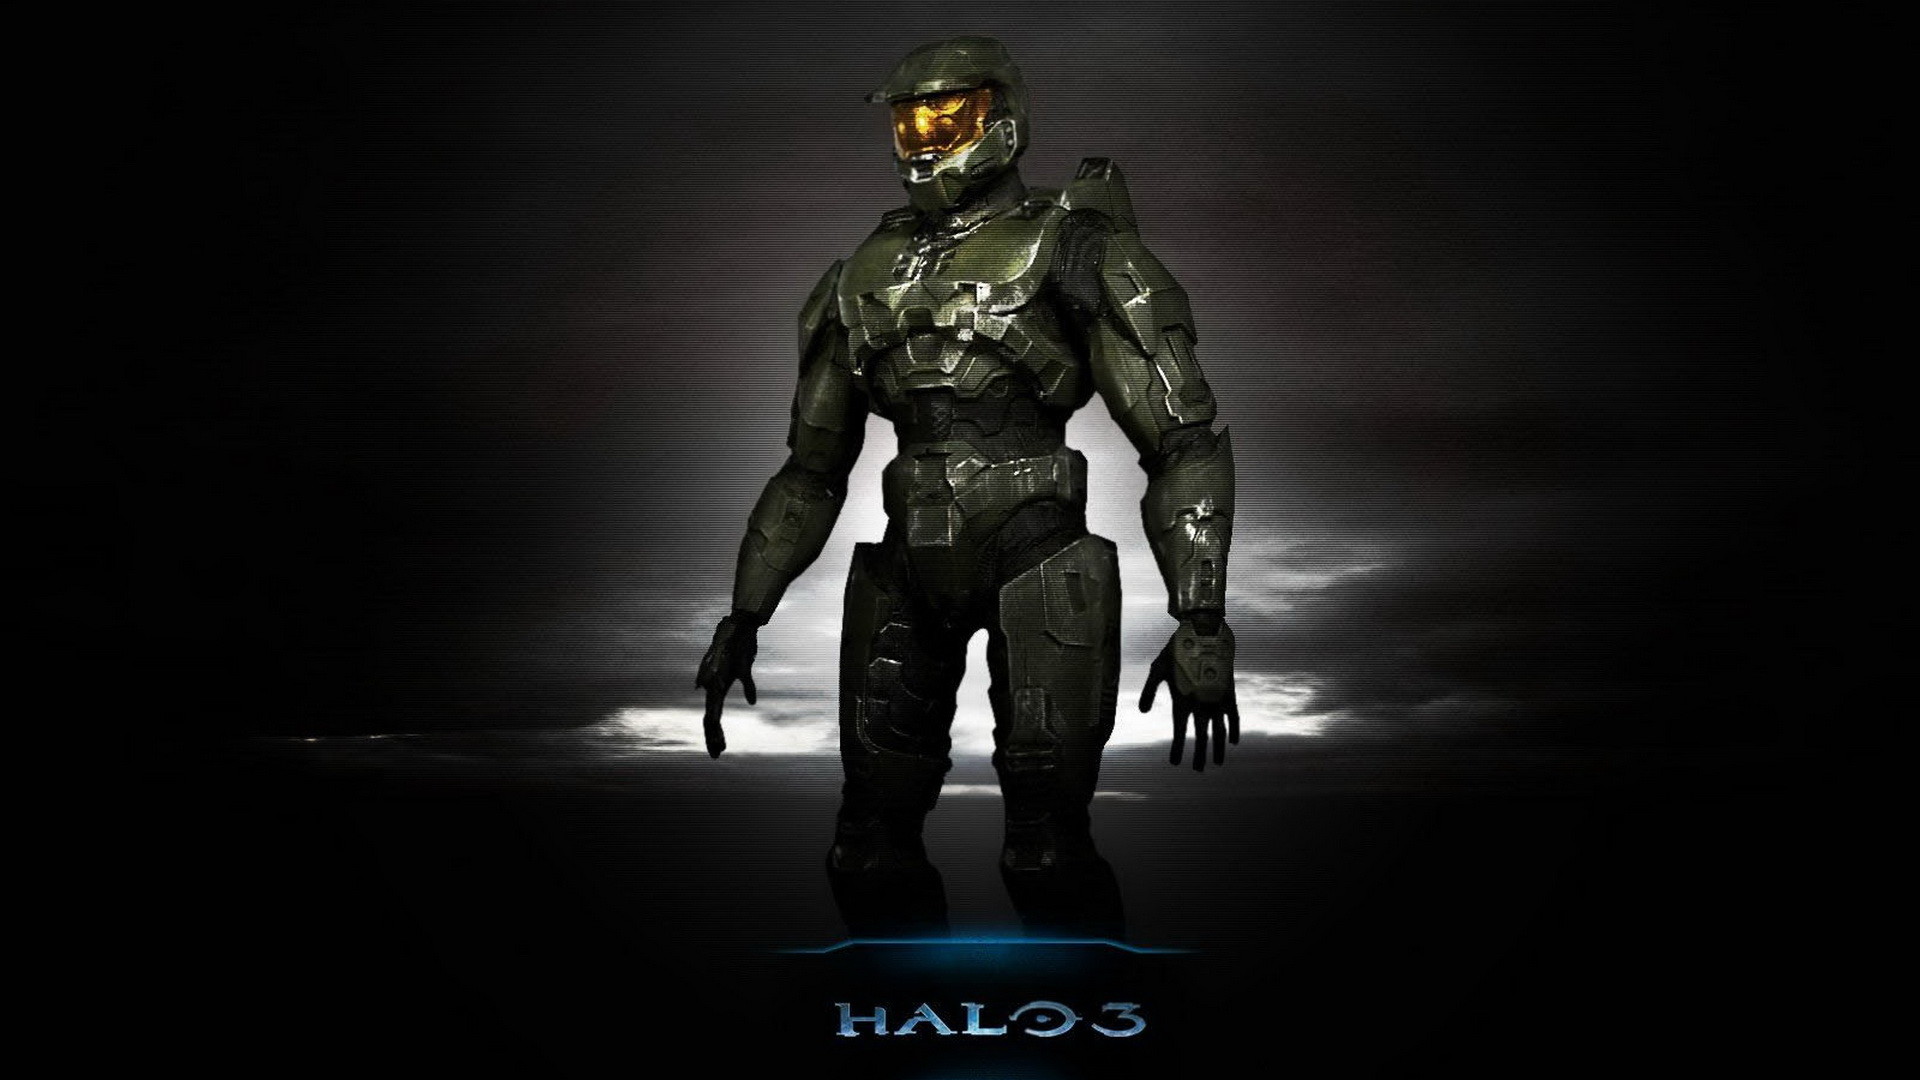 1920x1080 Halo 3 wallpaper